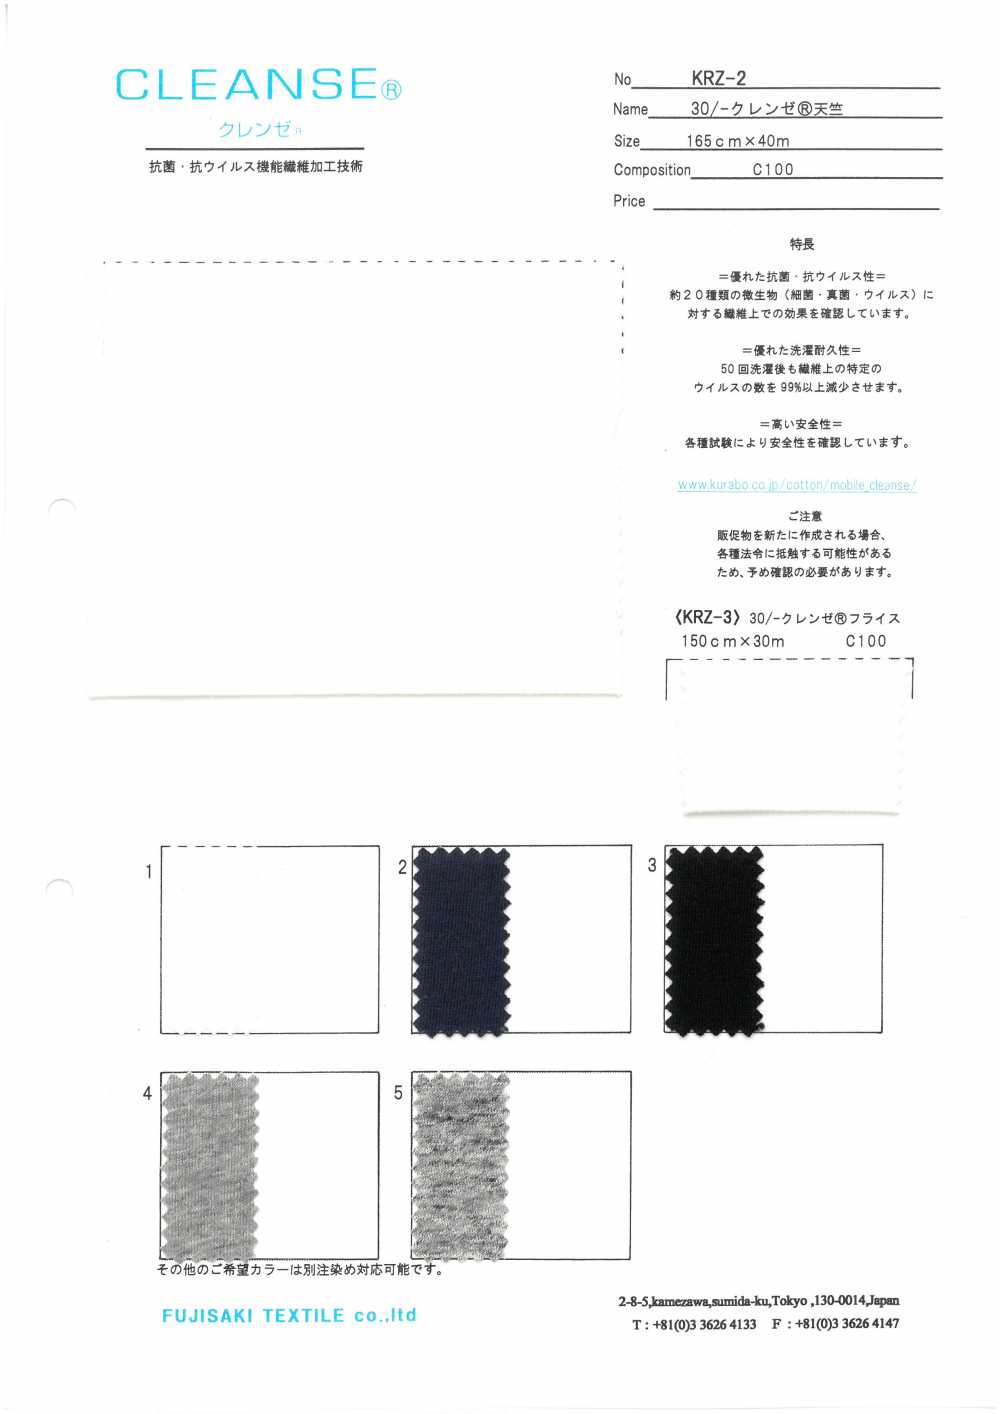 KRZ-2 30/- CLEANSE&# Jersey;[Textilgewebe] Fujisaki Textile